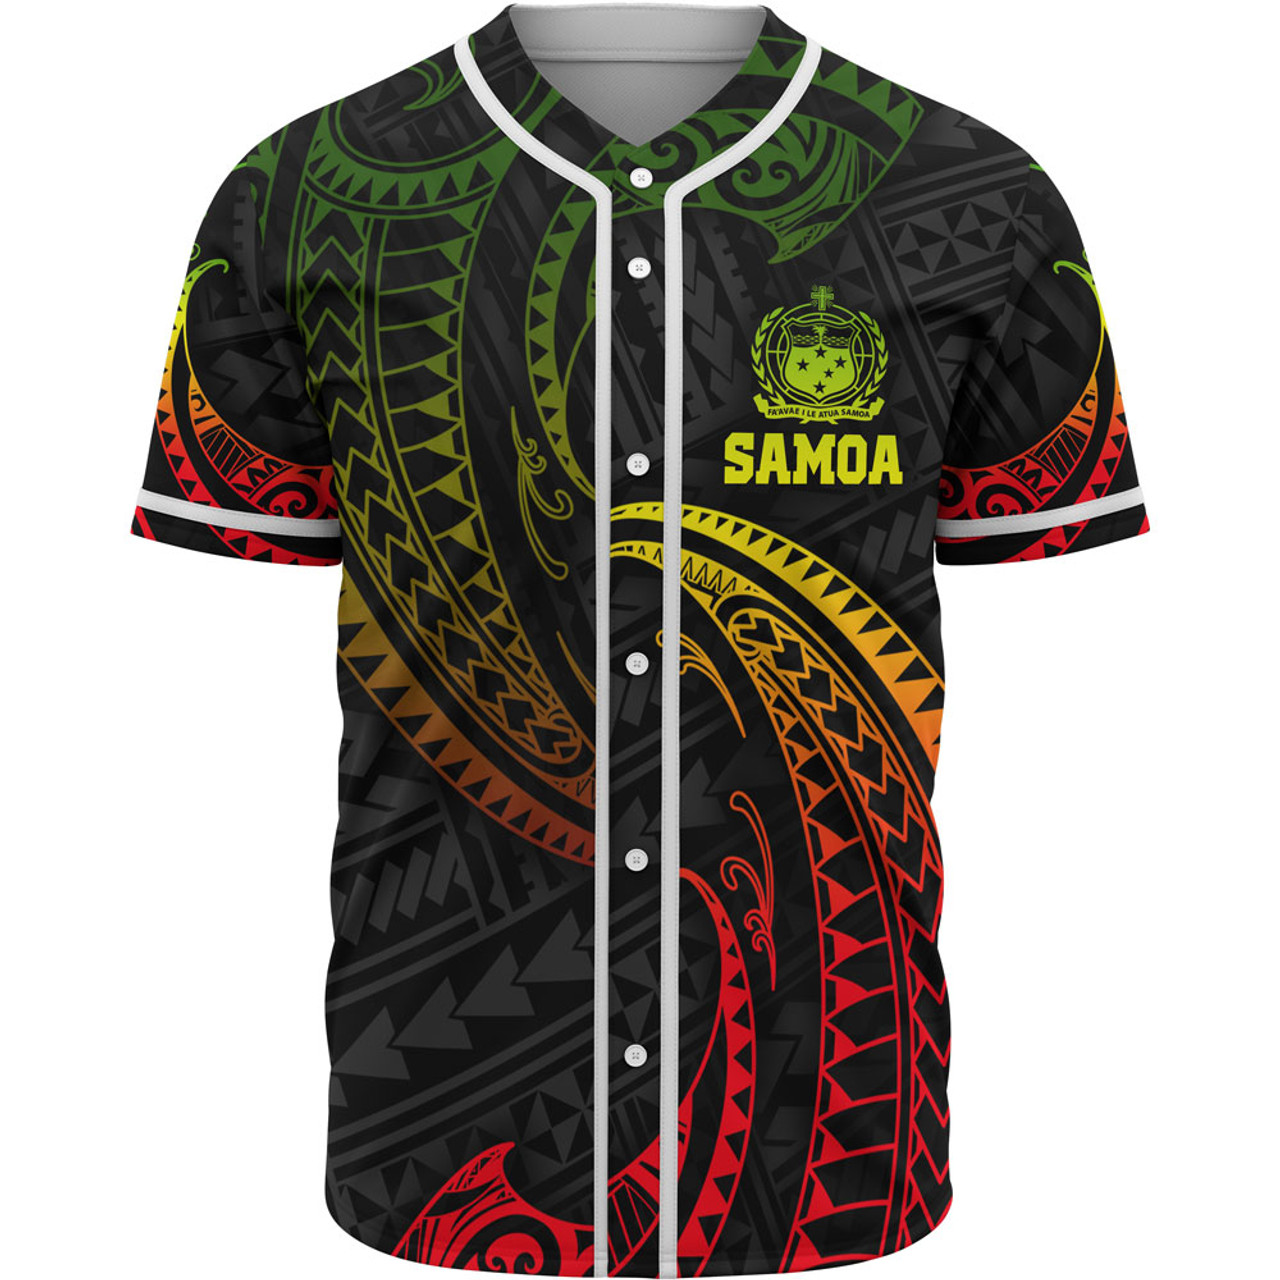 Samoa Polynesian Baseball Shirt - Reggae Tribal Wave